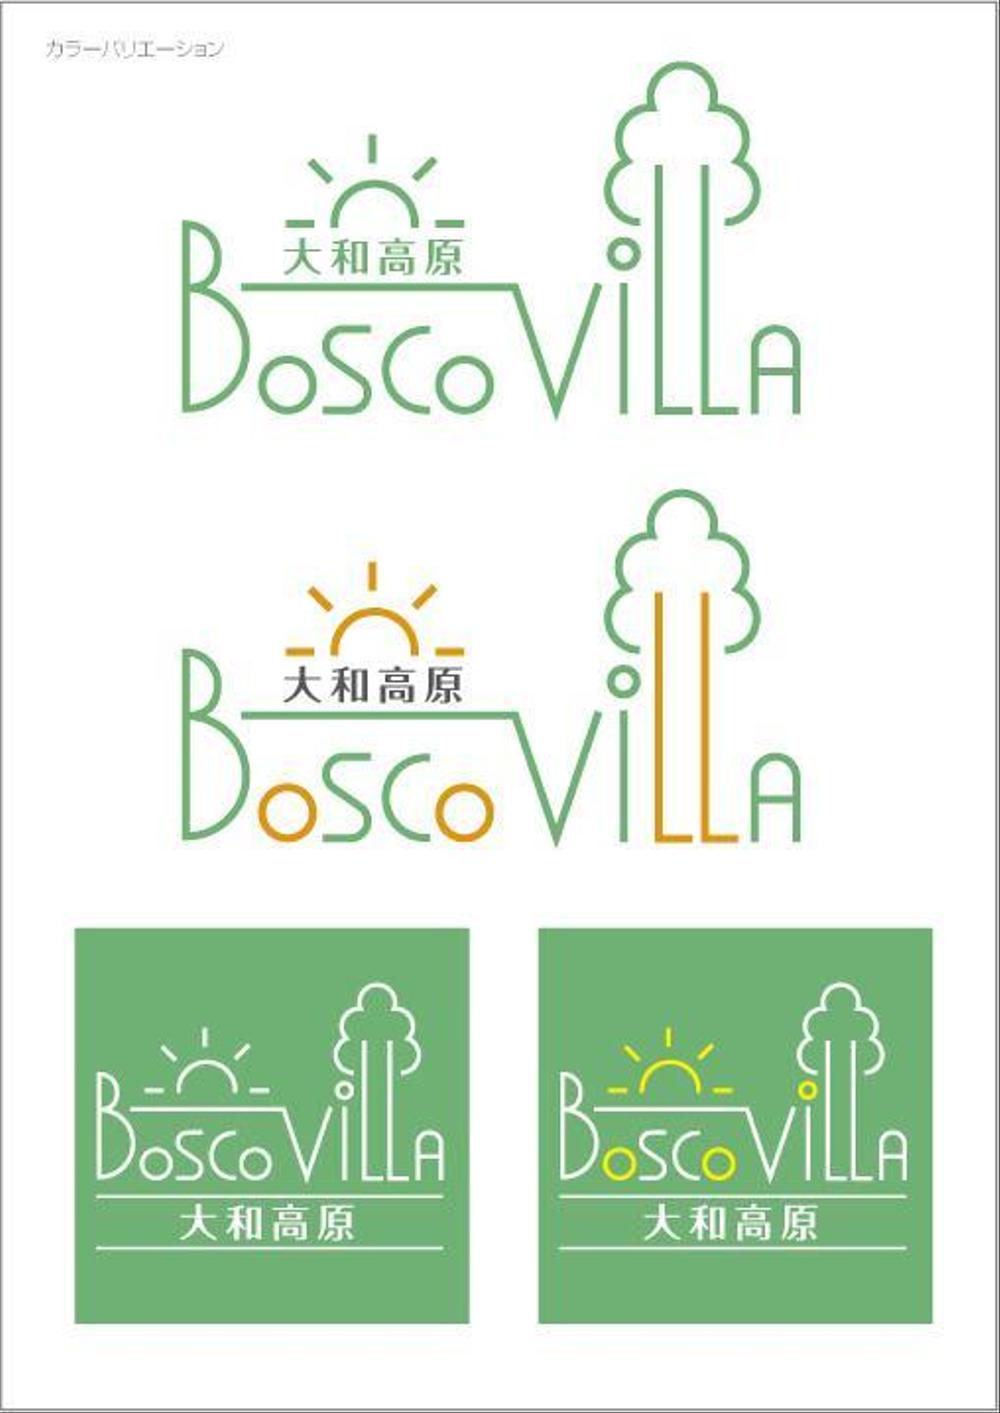 「大和高原　Bosco Villa」ロゴ製作依頼